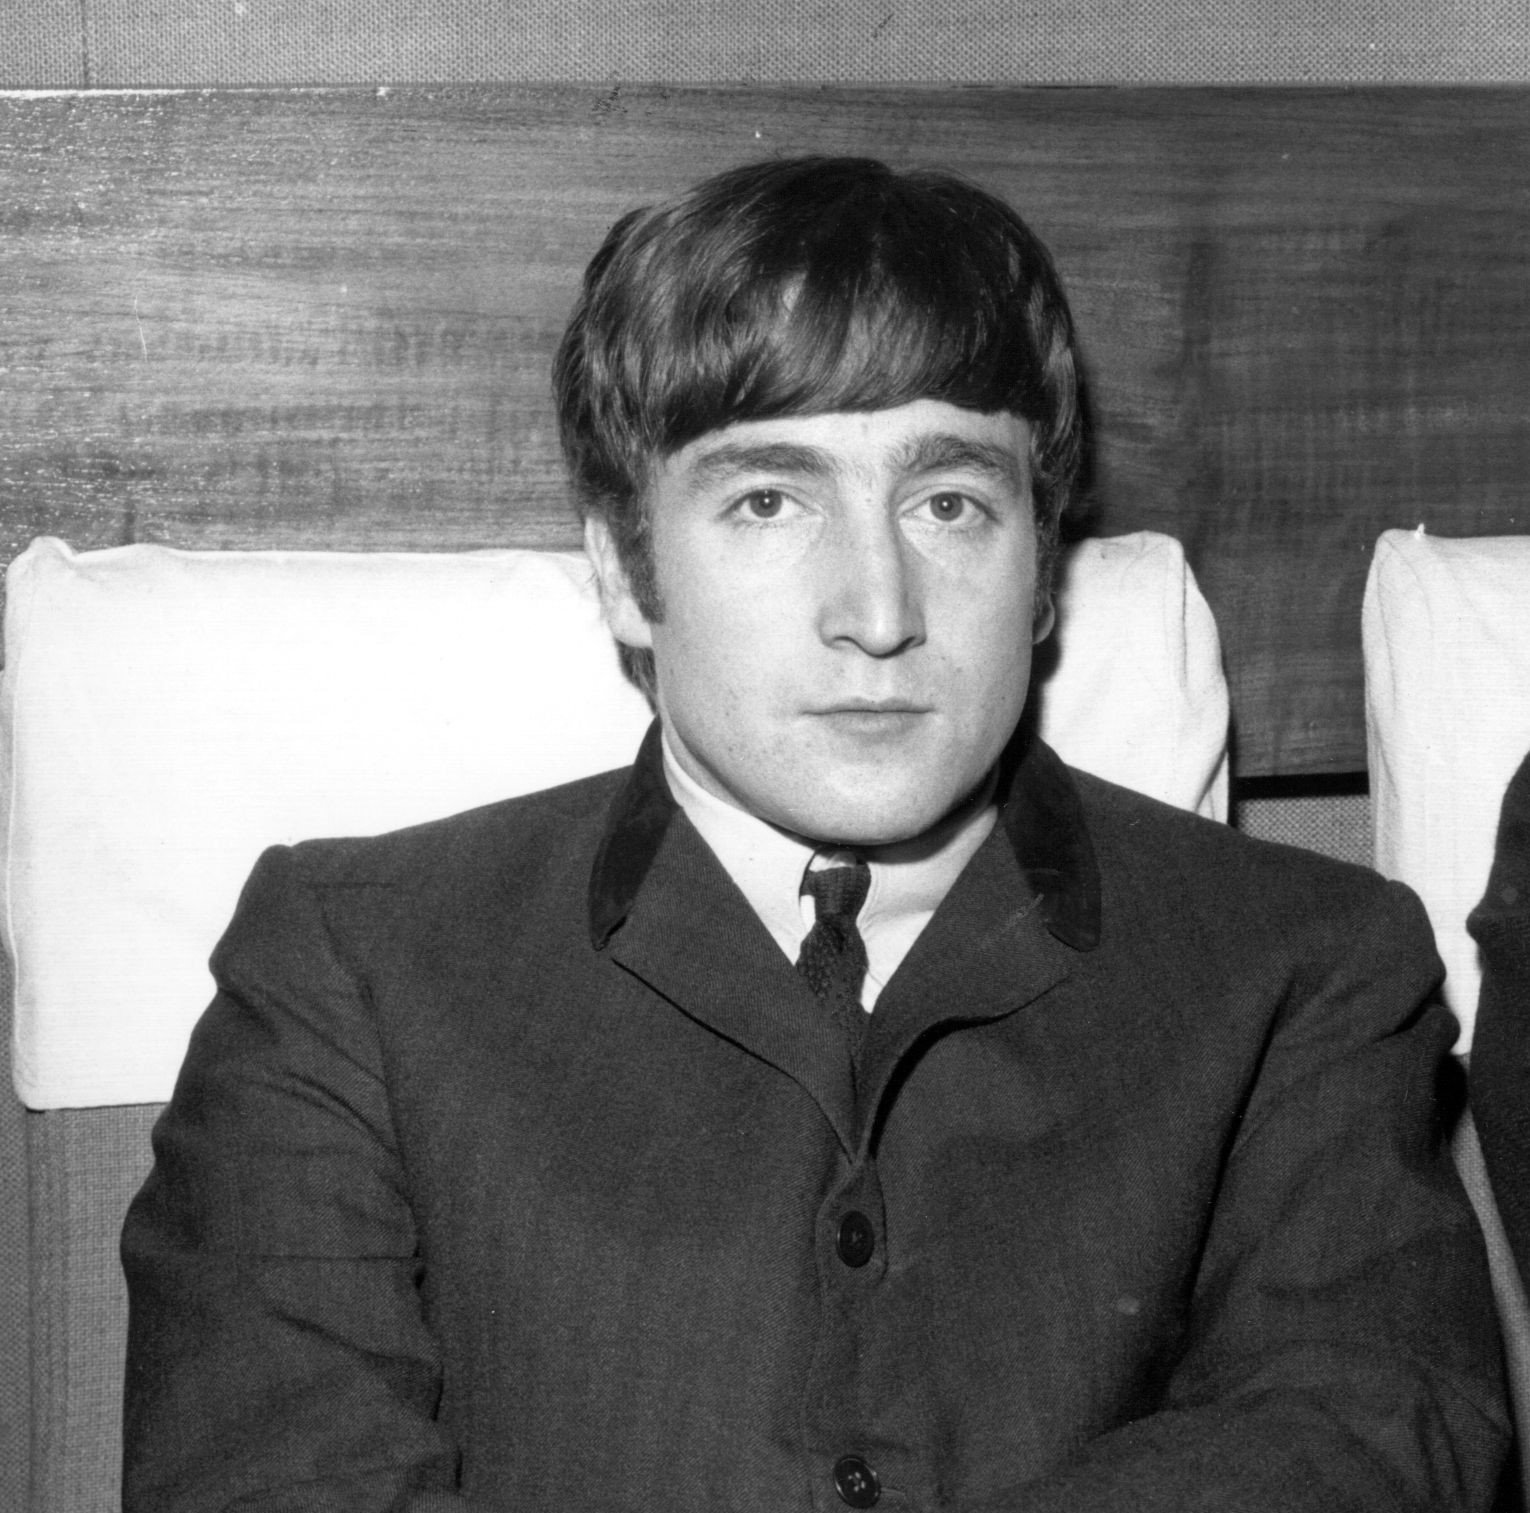 The Beatles' John Lennon wearing a suit